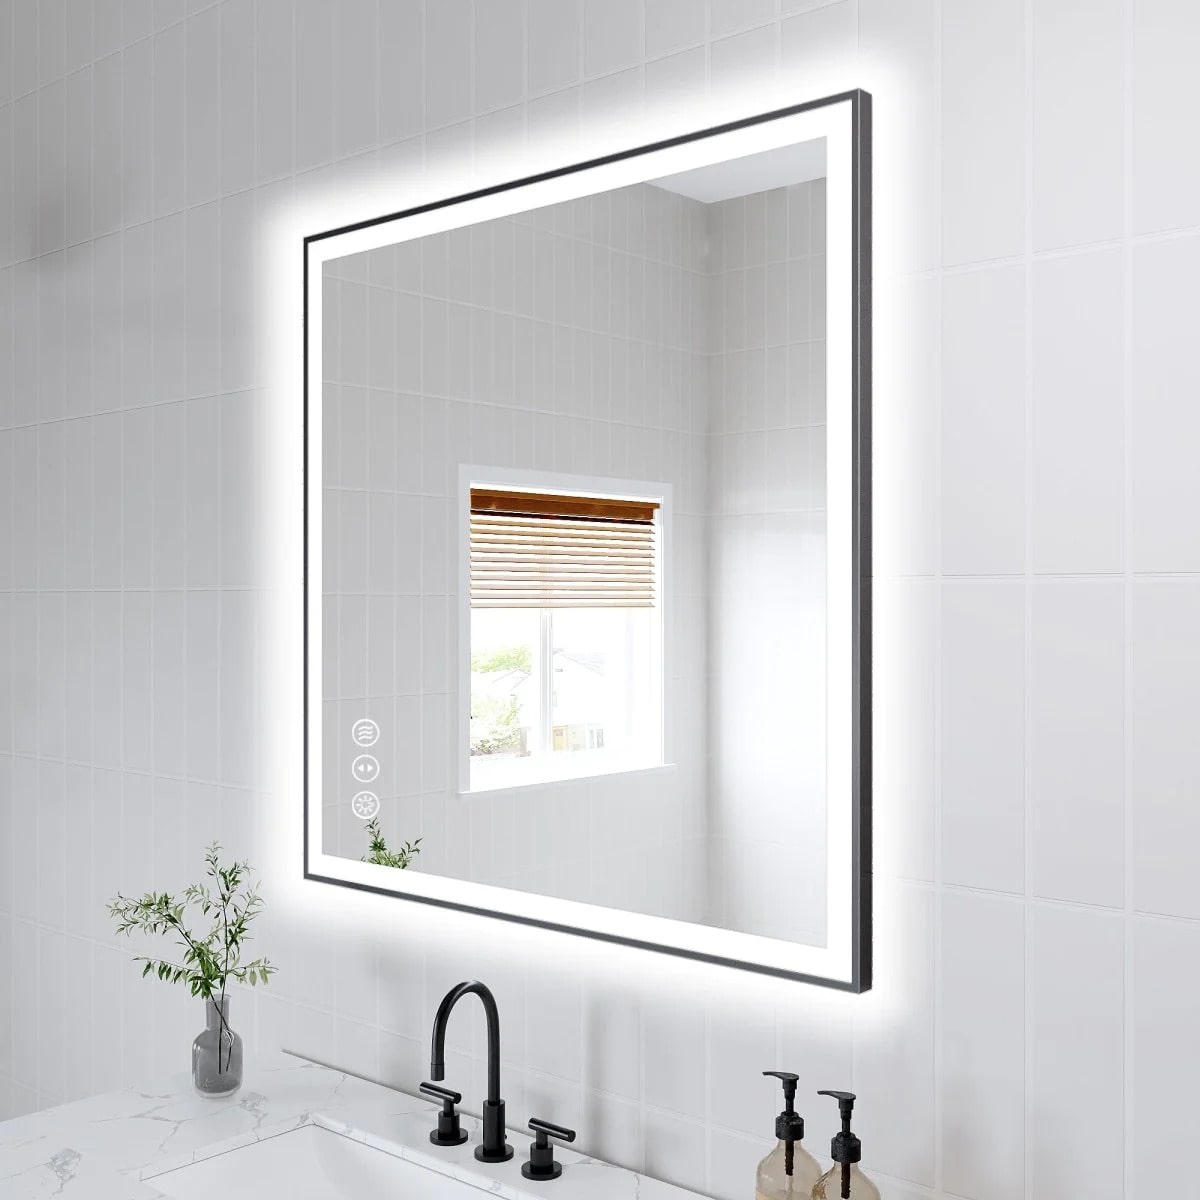 Apex-Noir 36"x 36" LED Mirror